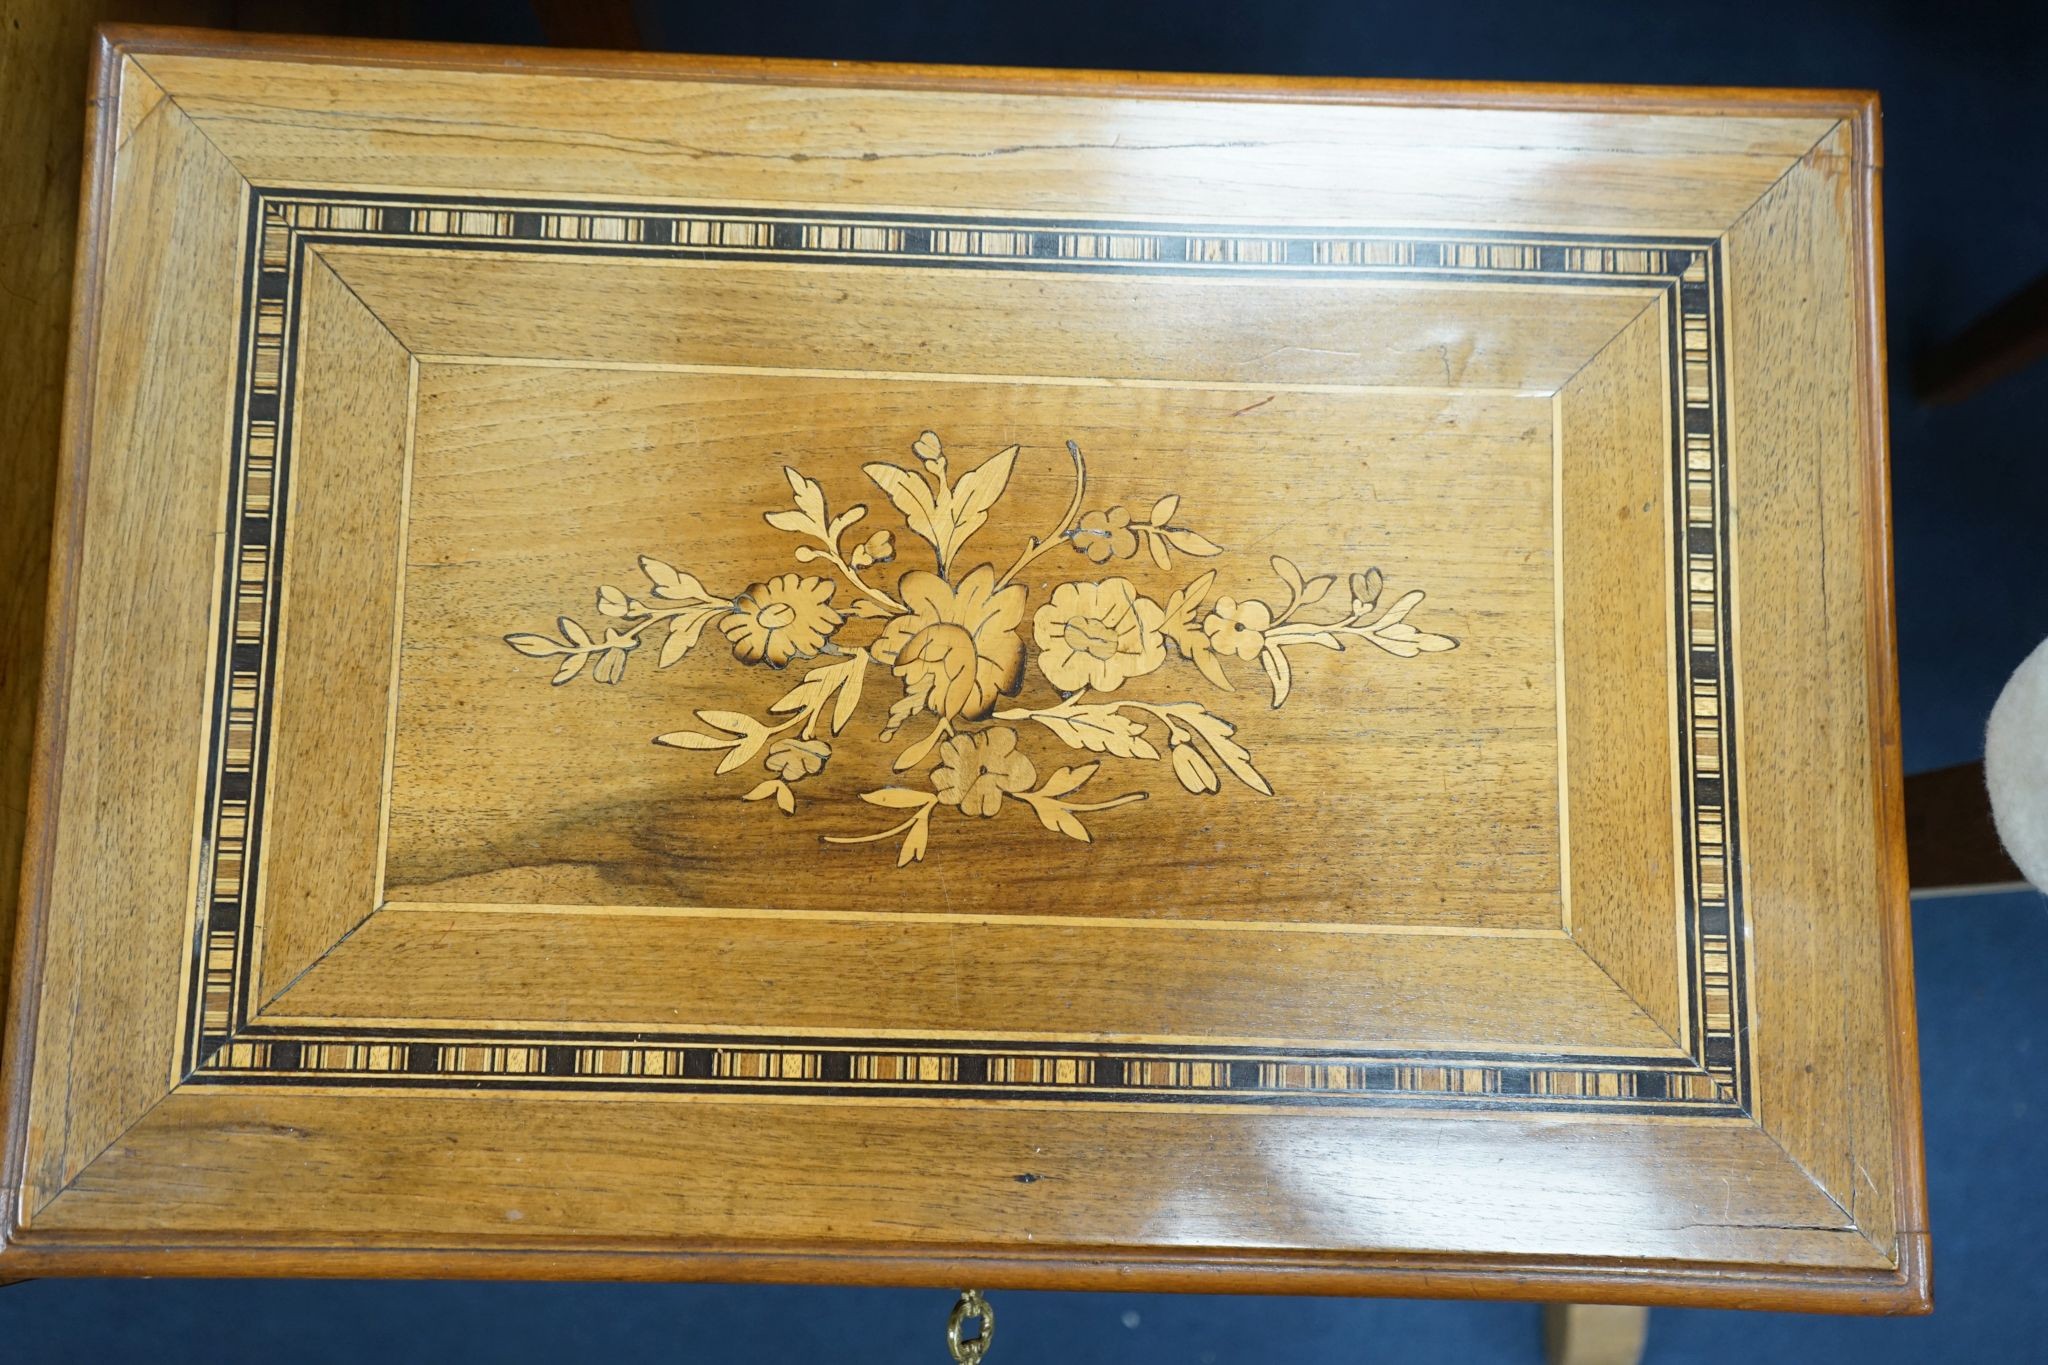 A 19th century French inlaid walnut work table, width 55cm, depth 37cm, height 71cm